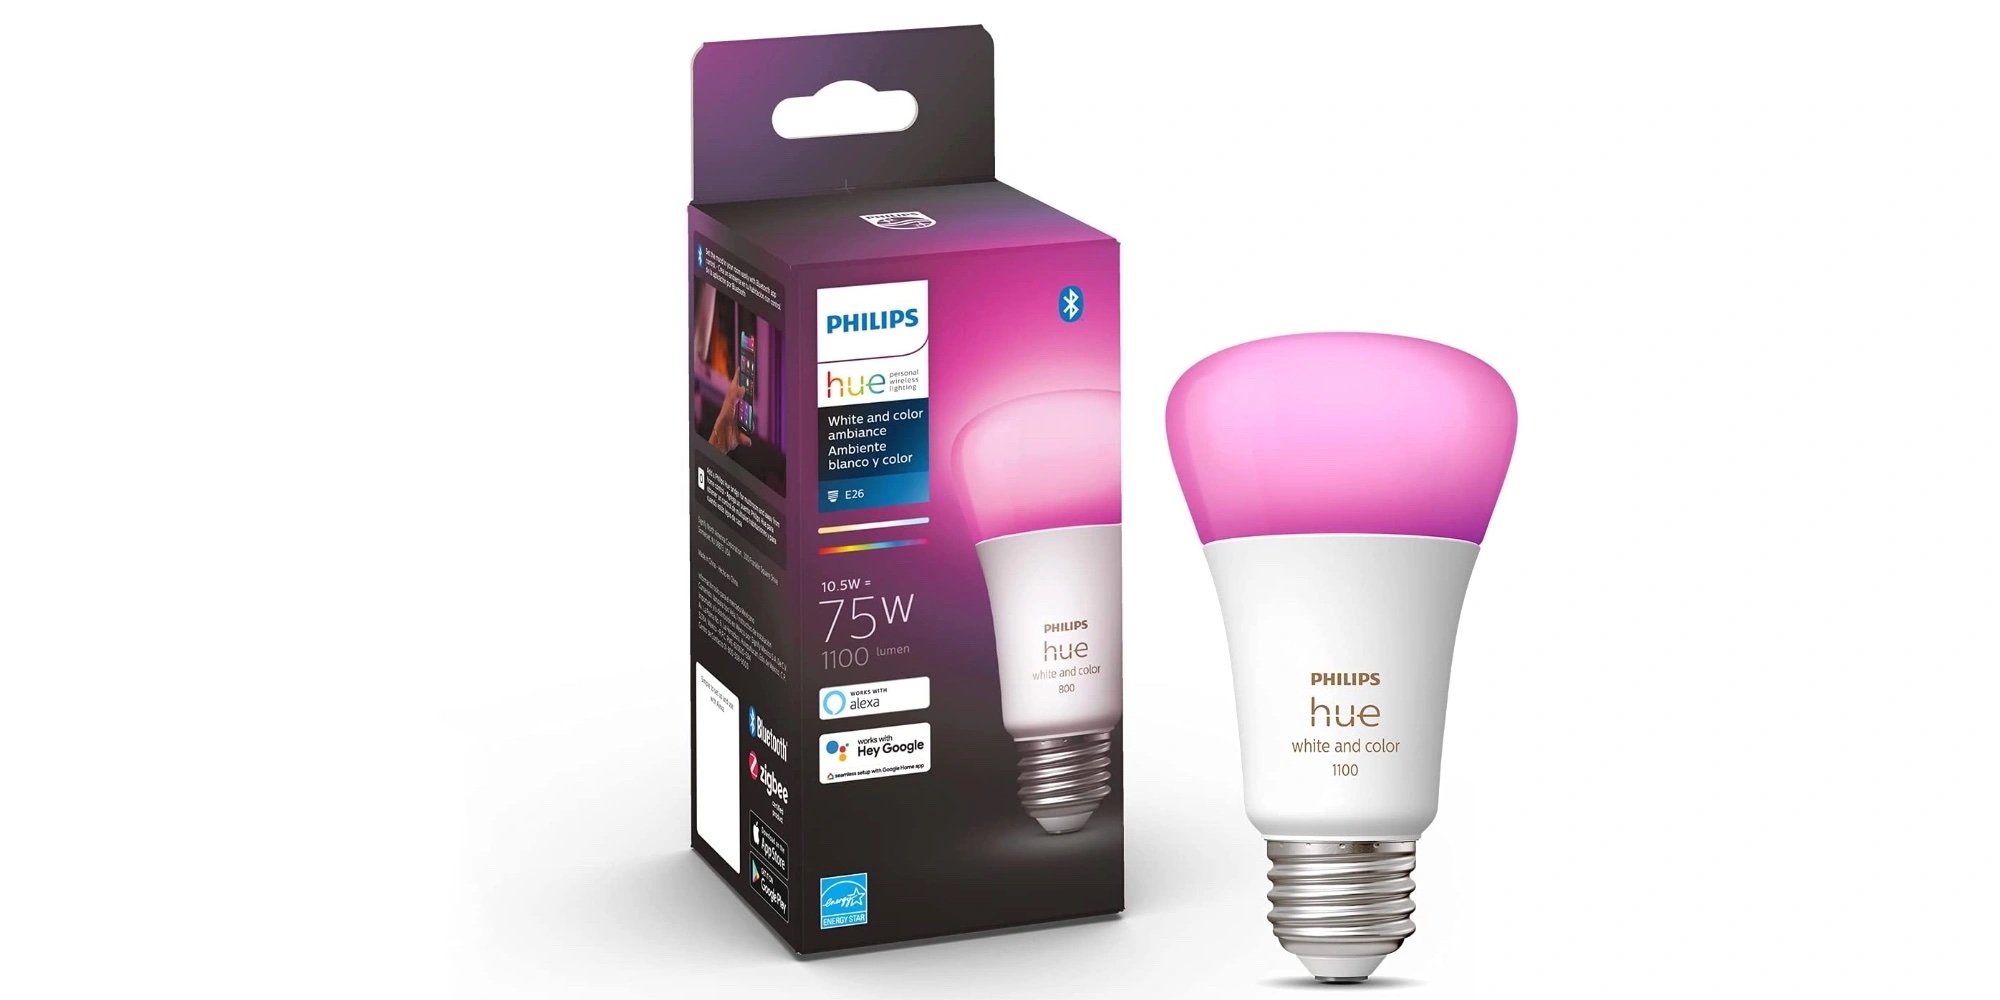 Philips Hue medium color smart LED bulb drops $35 at Amazon